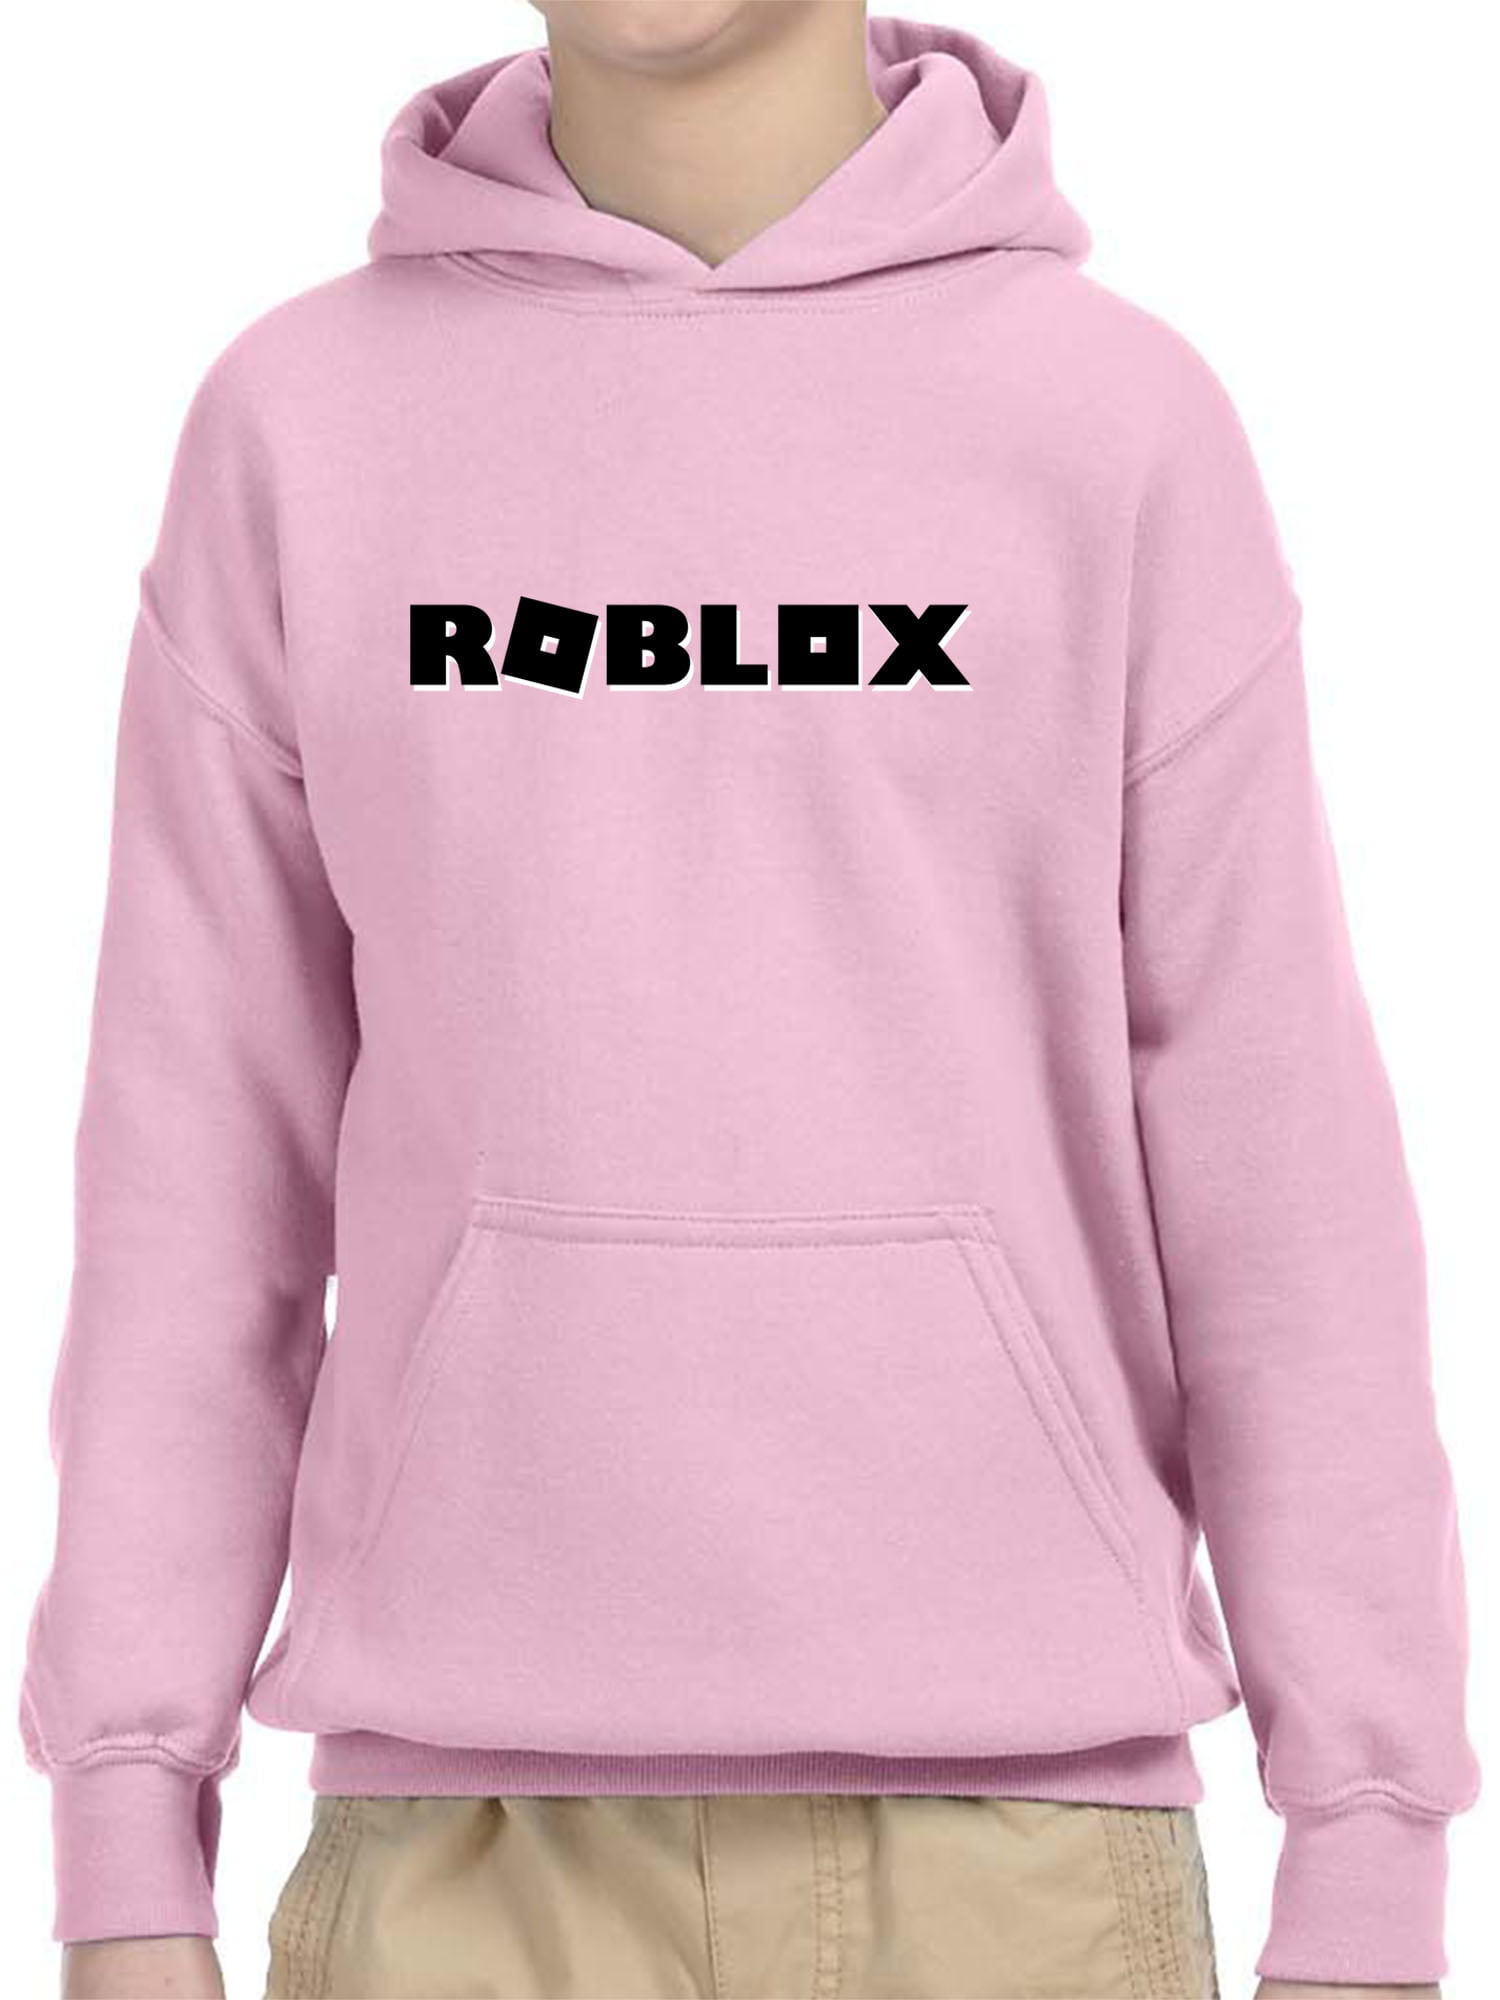 New Way New Way 1168 Youth Hoodie Roblox Block Logo Game Accent Unisex Pullover Sweatshirt Medium Light Pink Walmart Com Walmart Com - pink roblox logo￼